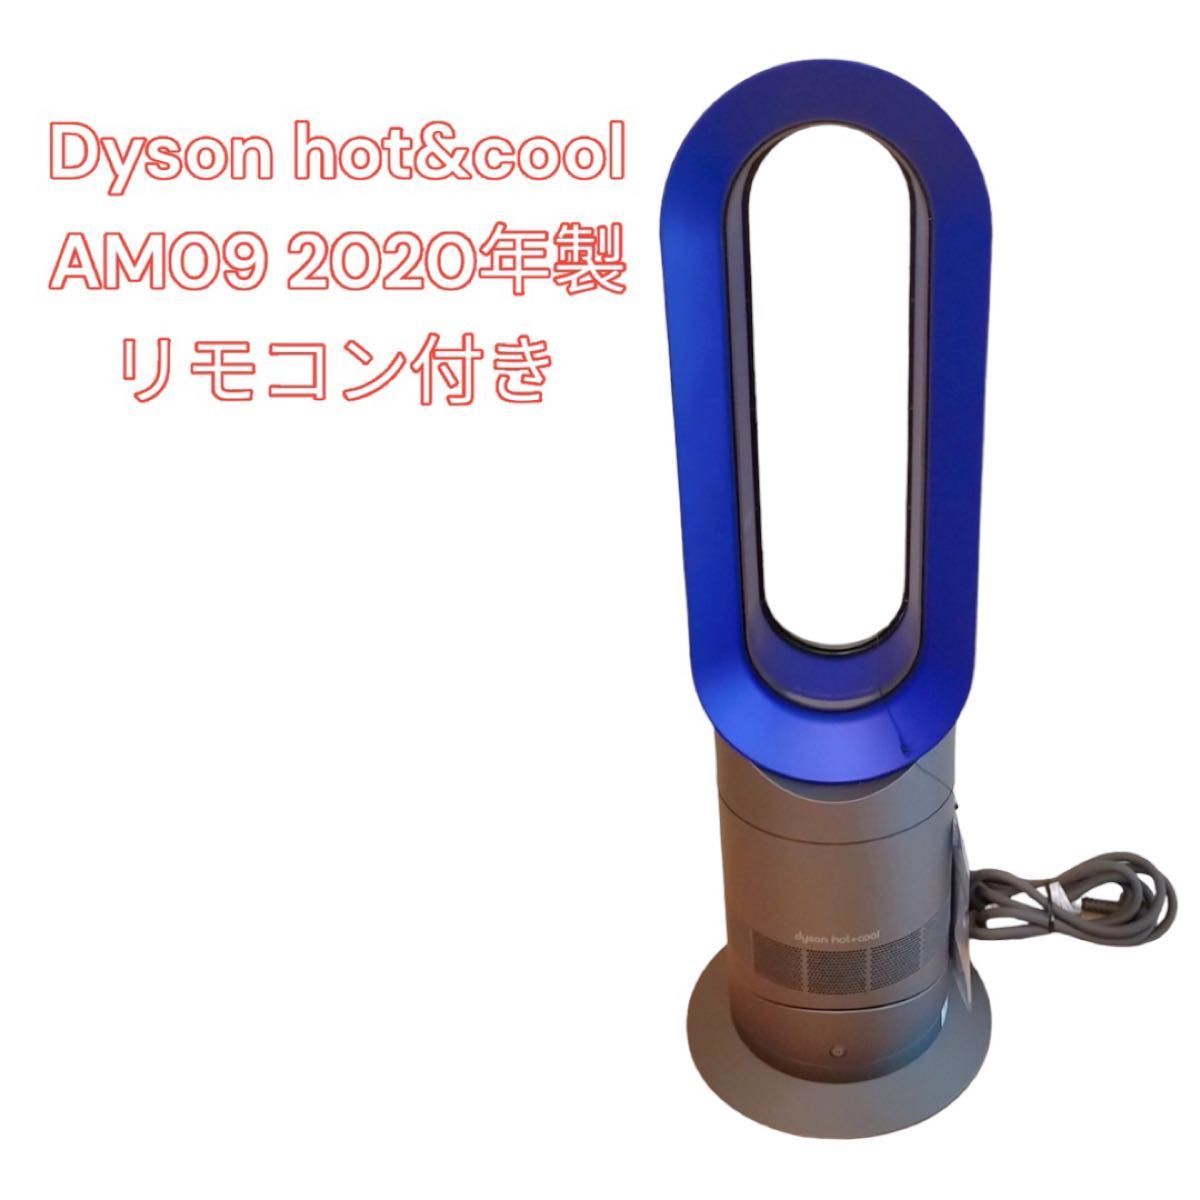 Dyson hot&cool AM09 2020年製 リモコン付き